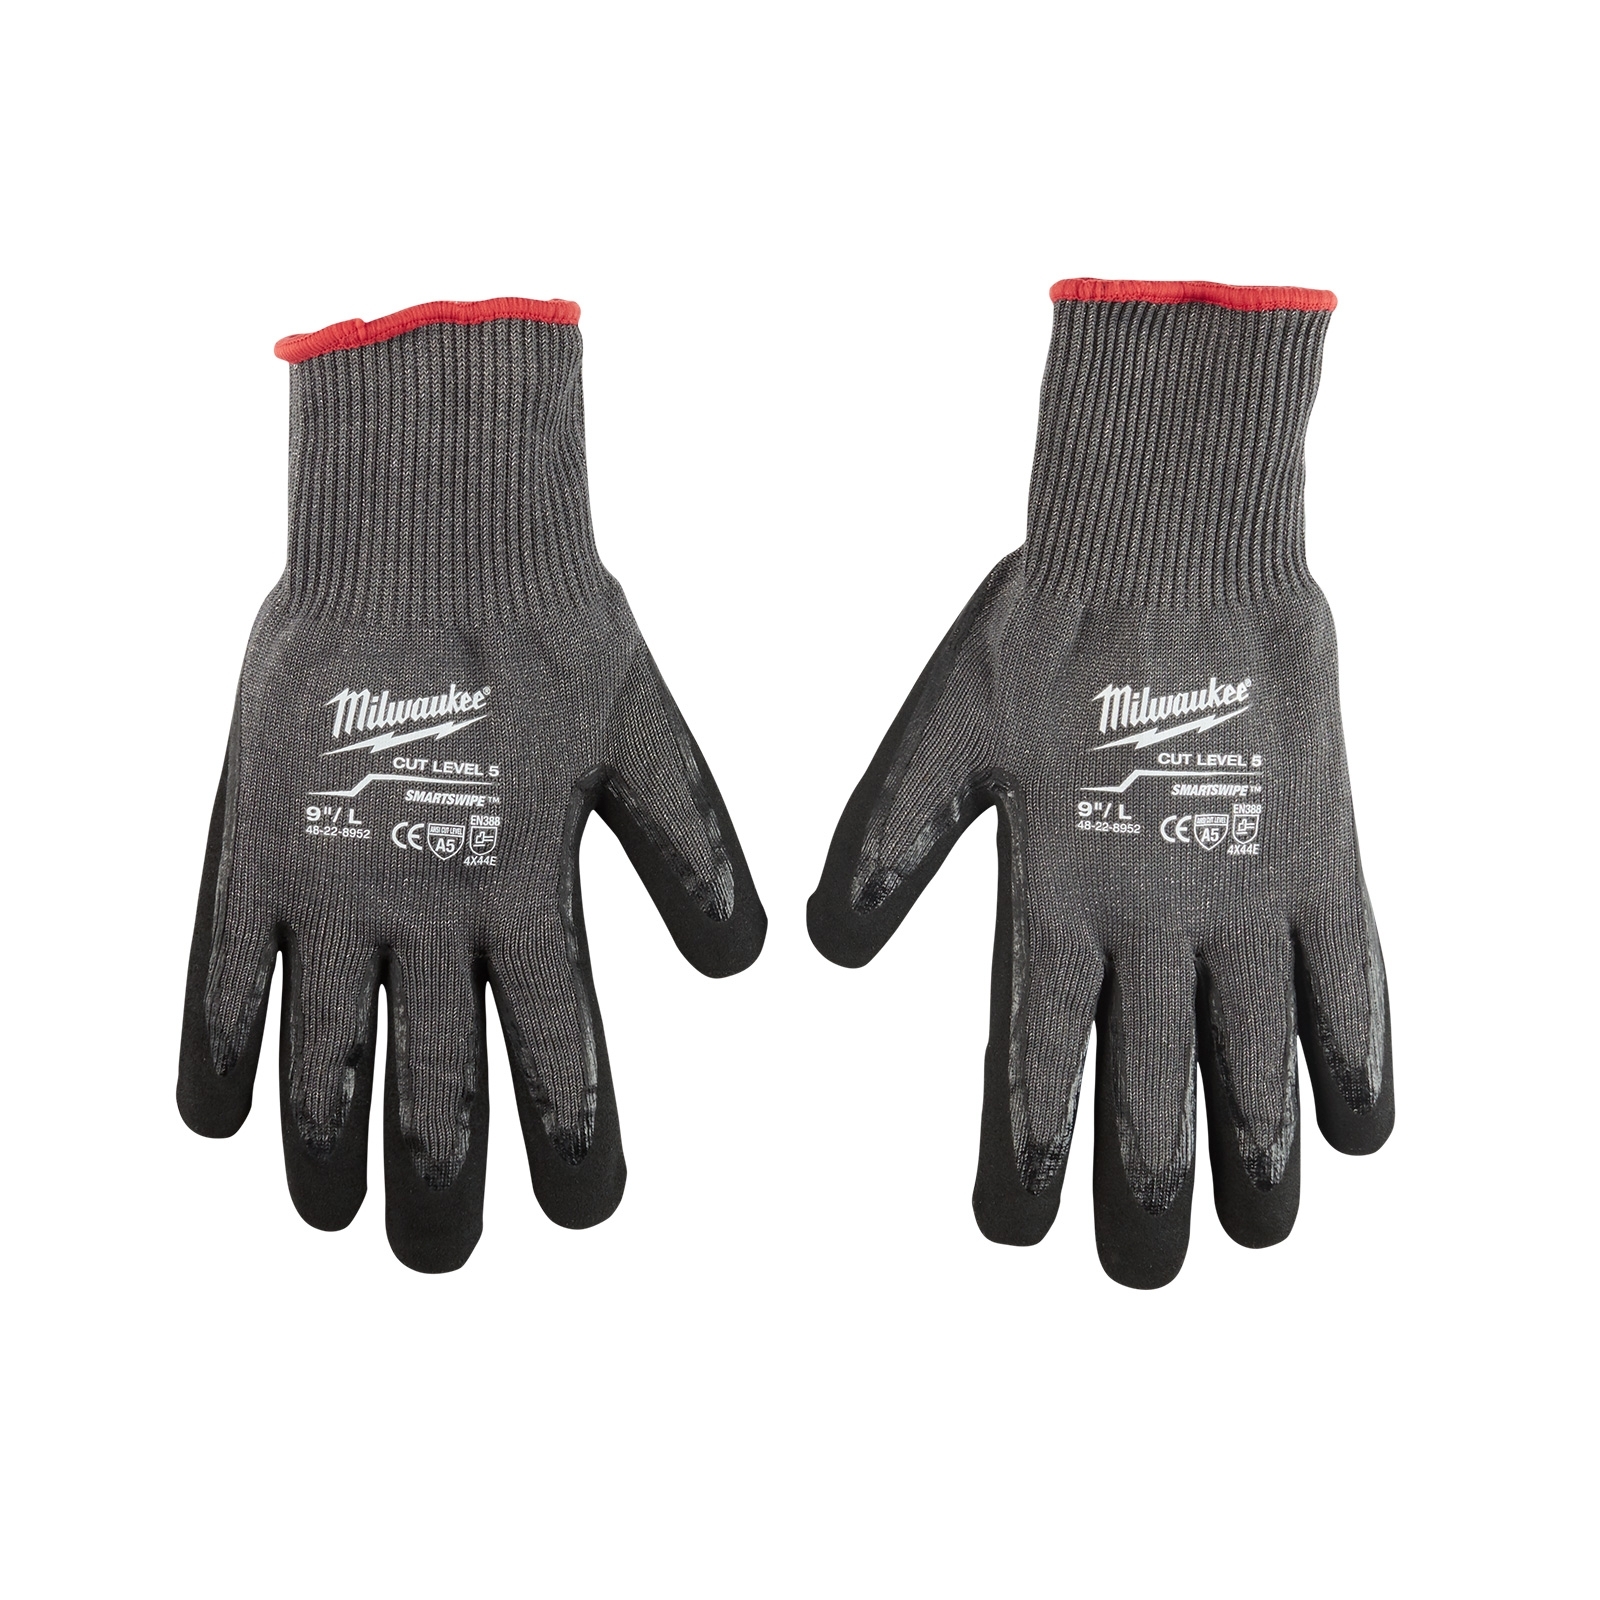 Milwaukee Cut Level 5 Gloves - Medium 48228951